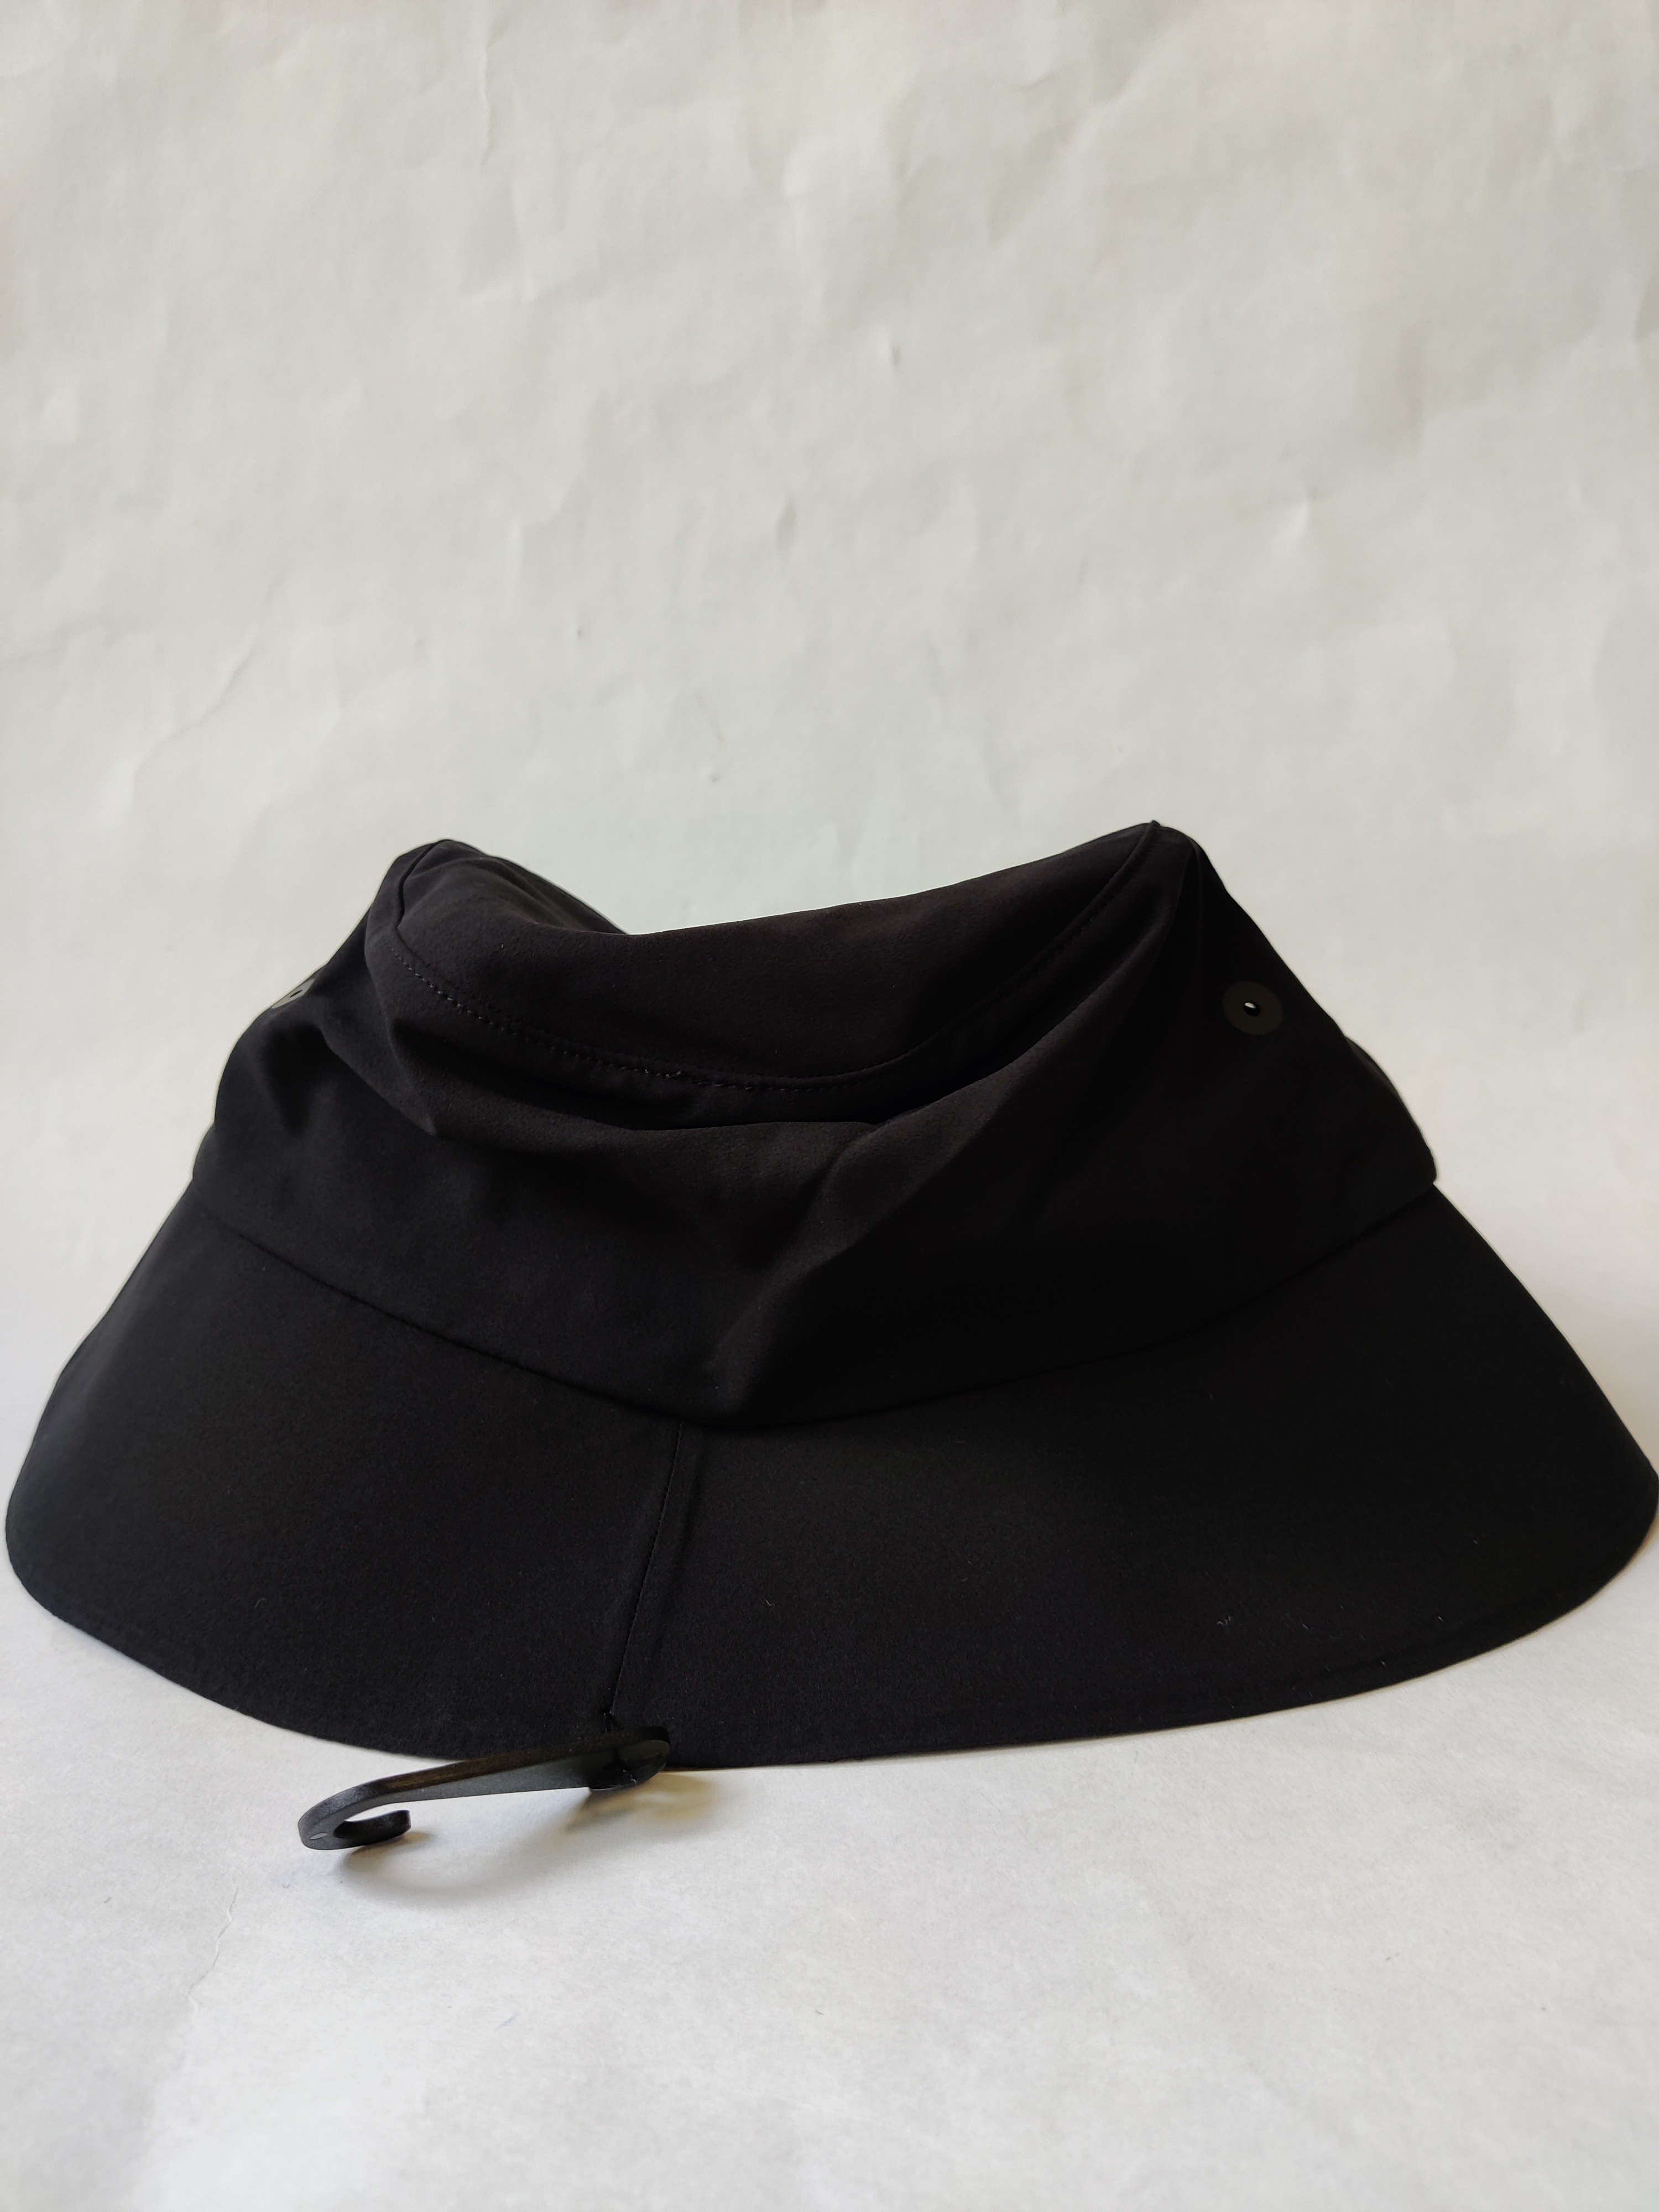 Sinsolo Bucket Hat Size L/XL Sun Cap Summer Black Travel Beach Outdoor Men UPF 50+ - 4